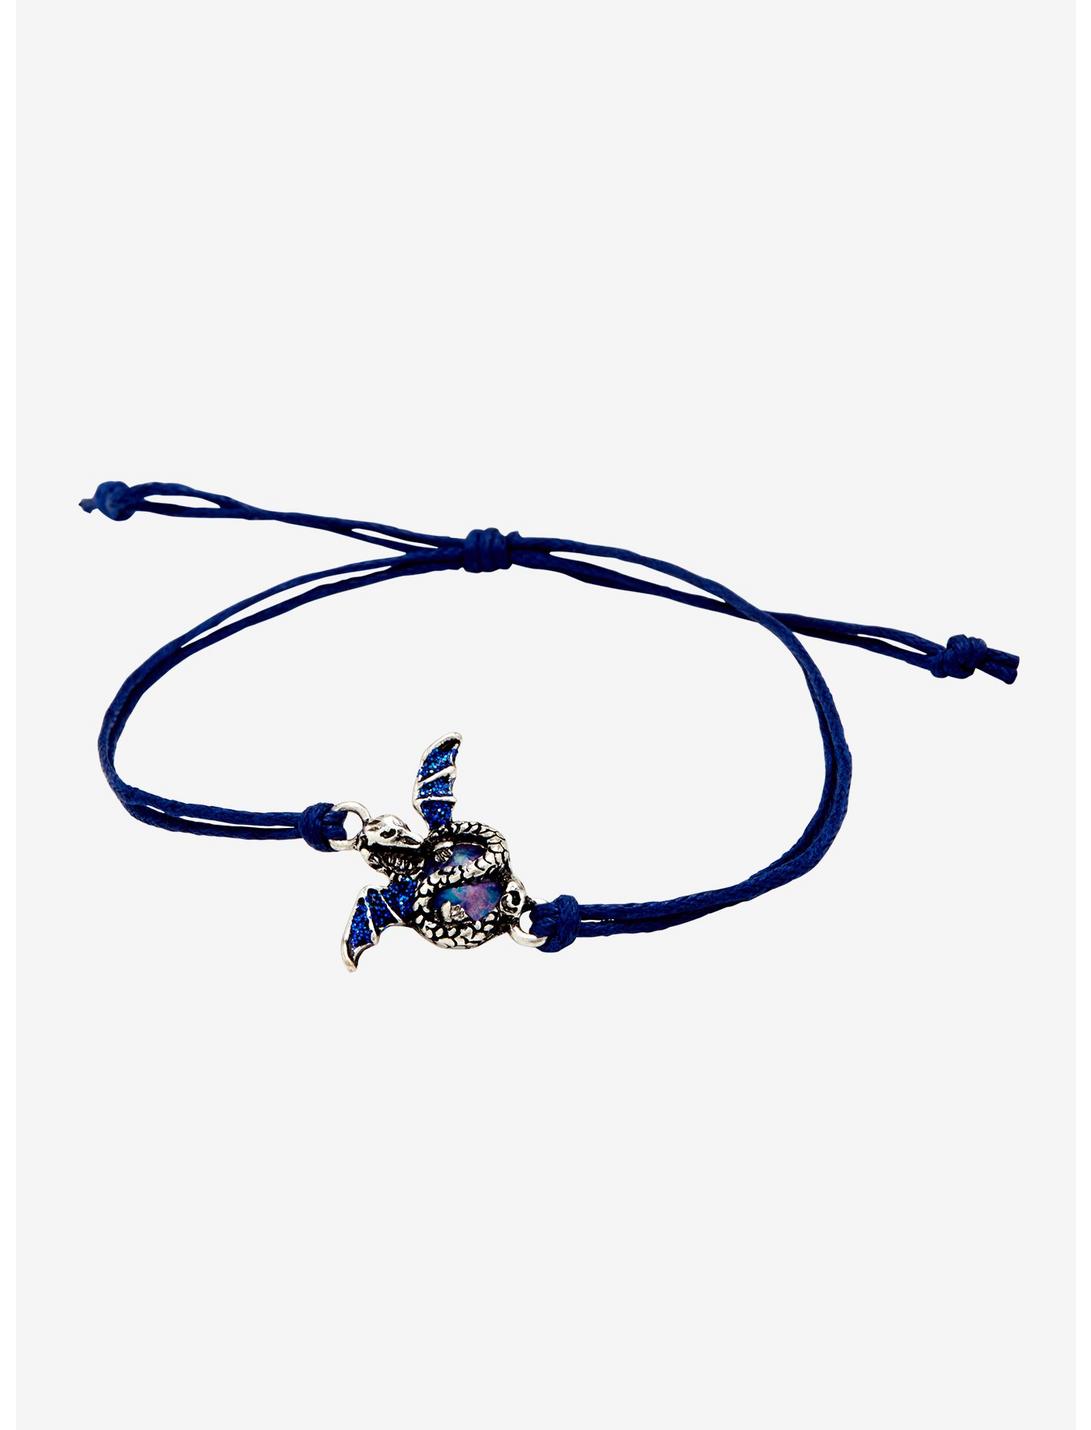 Mystery Dragon Cord Bracelet, , hi-res